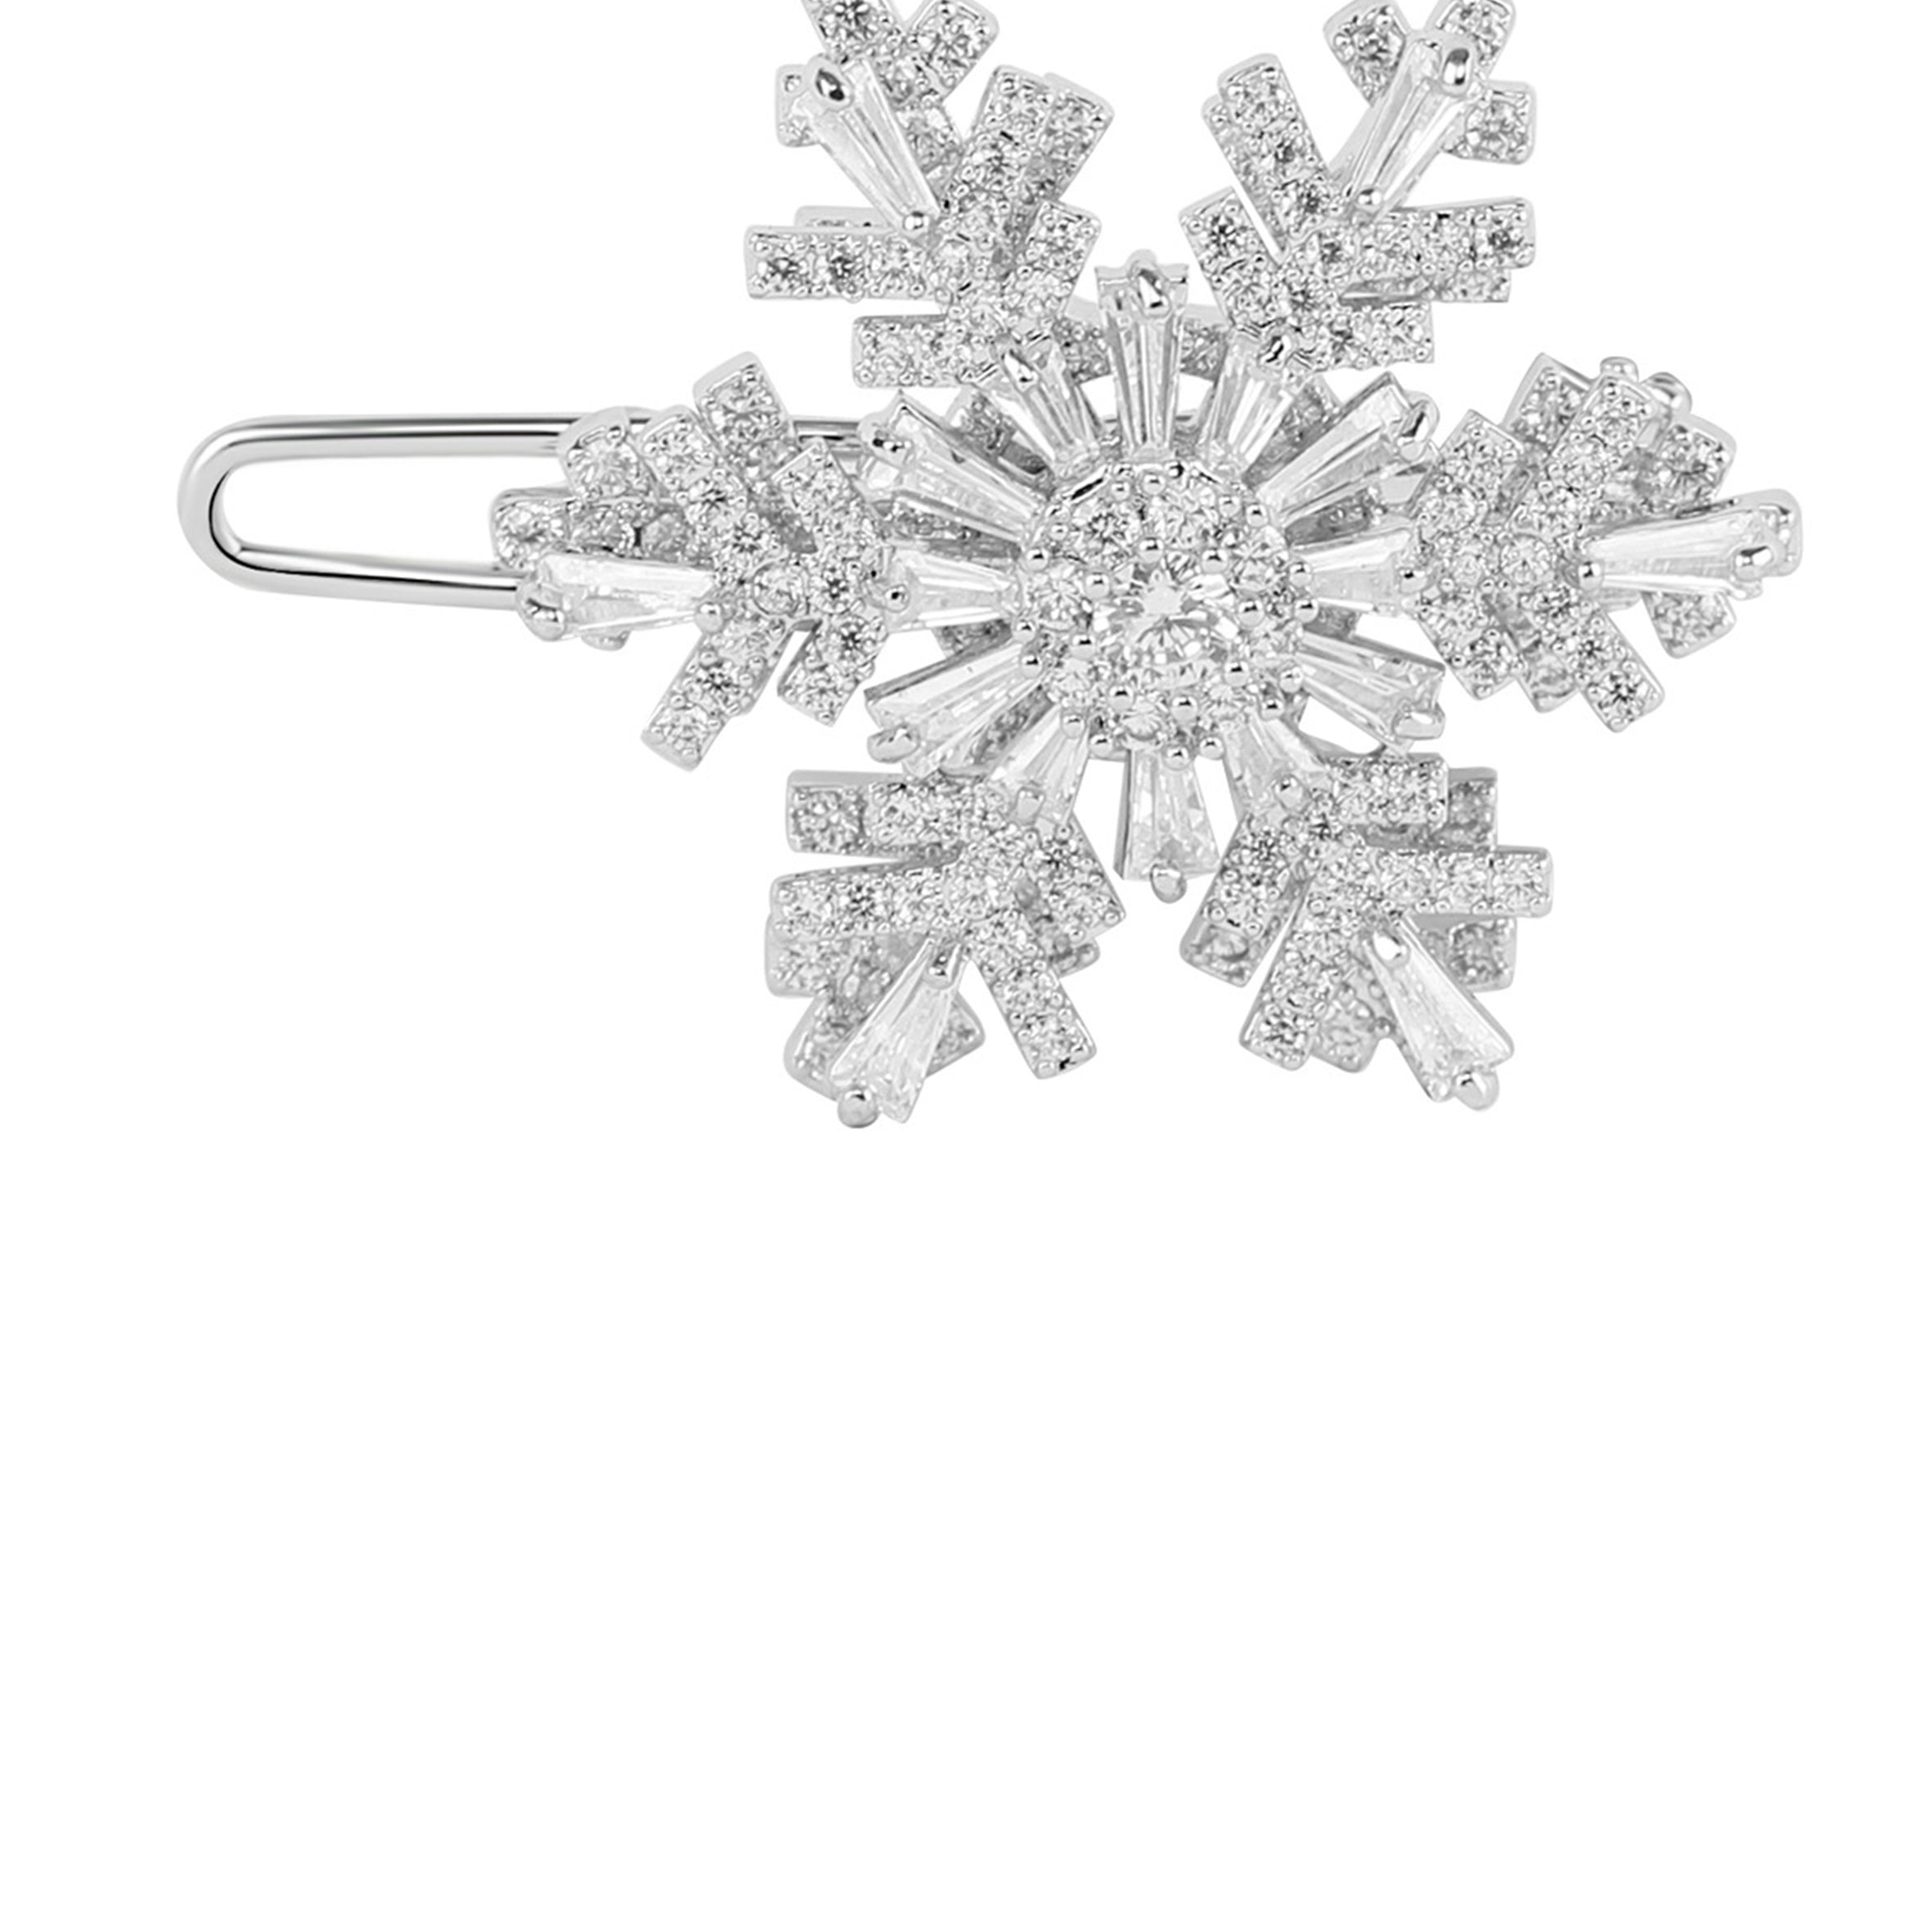 Snowflake Cubic Zirconia Hair Clip L4364